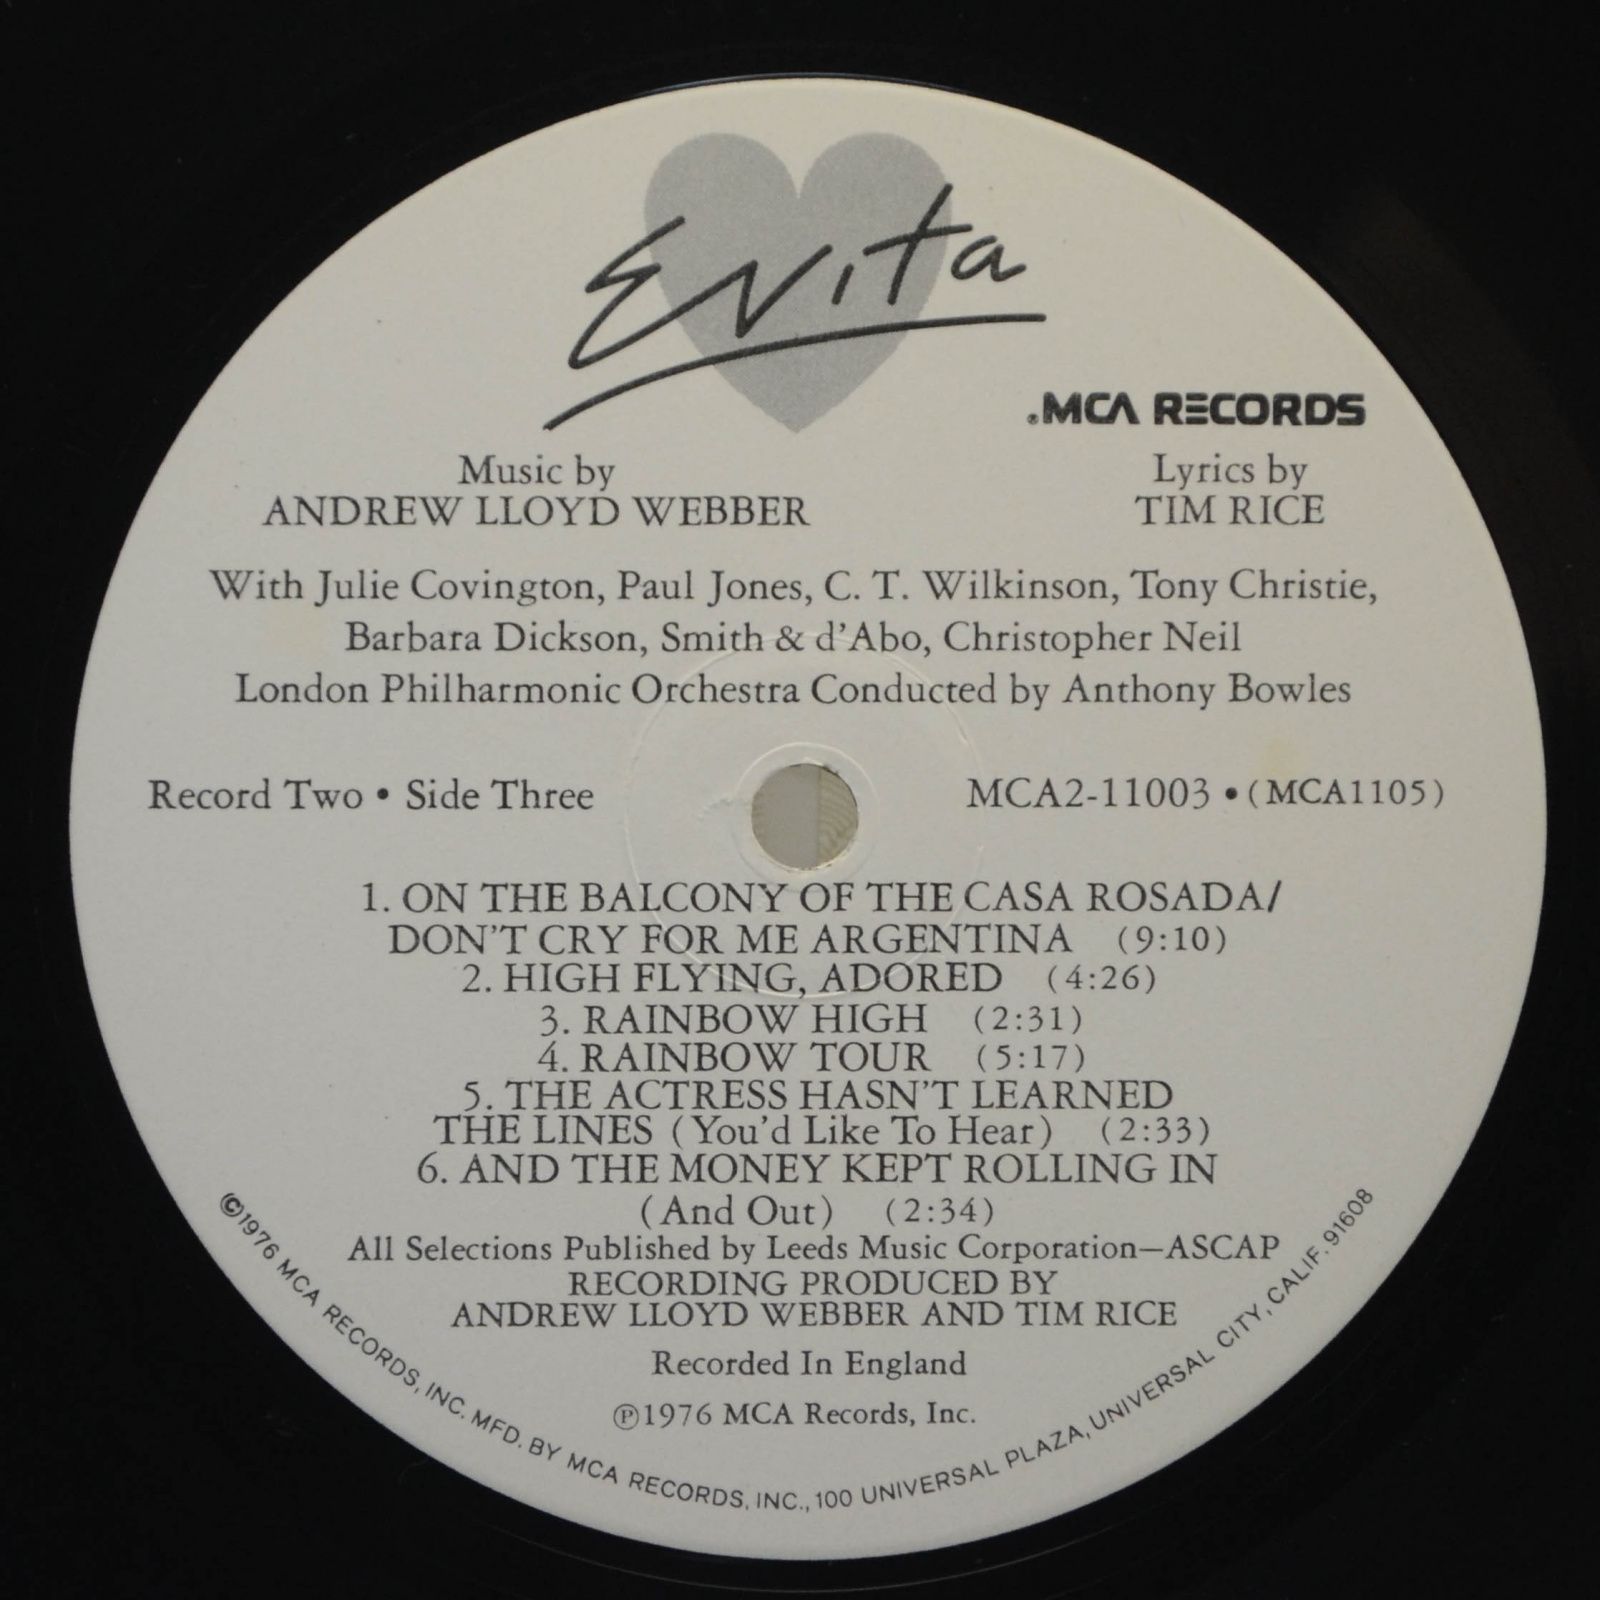 Andrew Lloyd Webber And Tim Rice — Evita, 1979